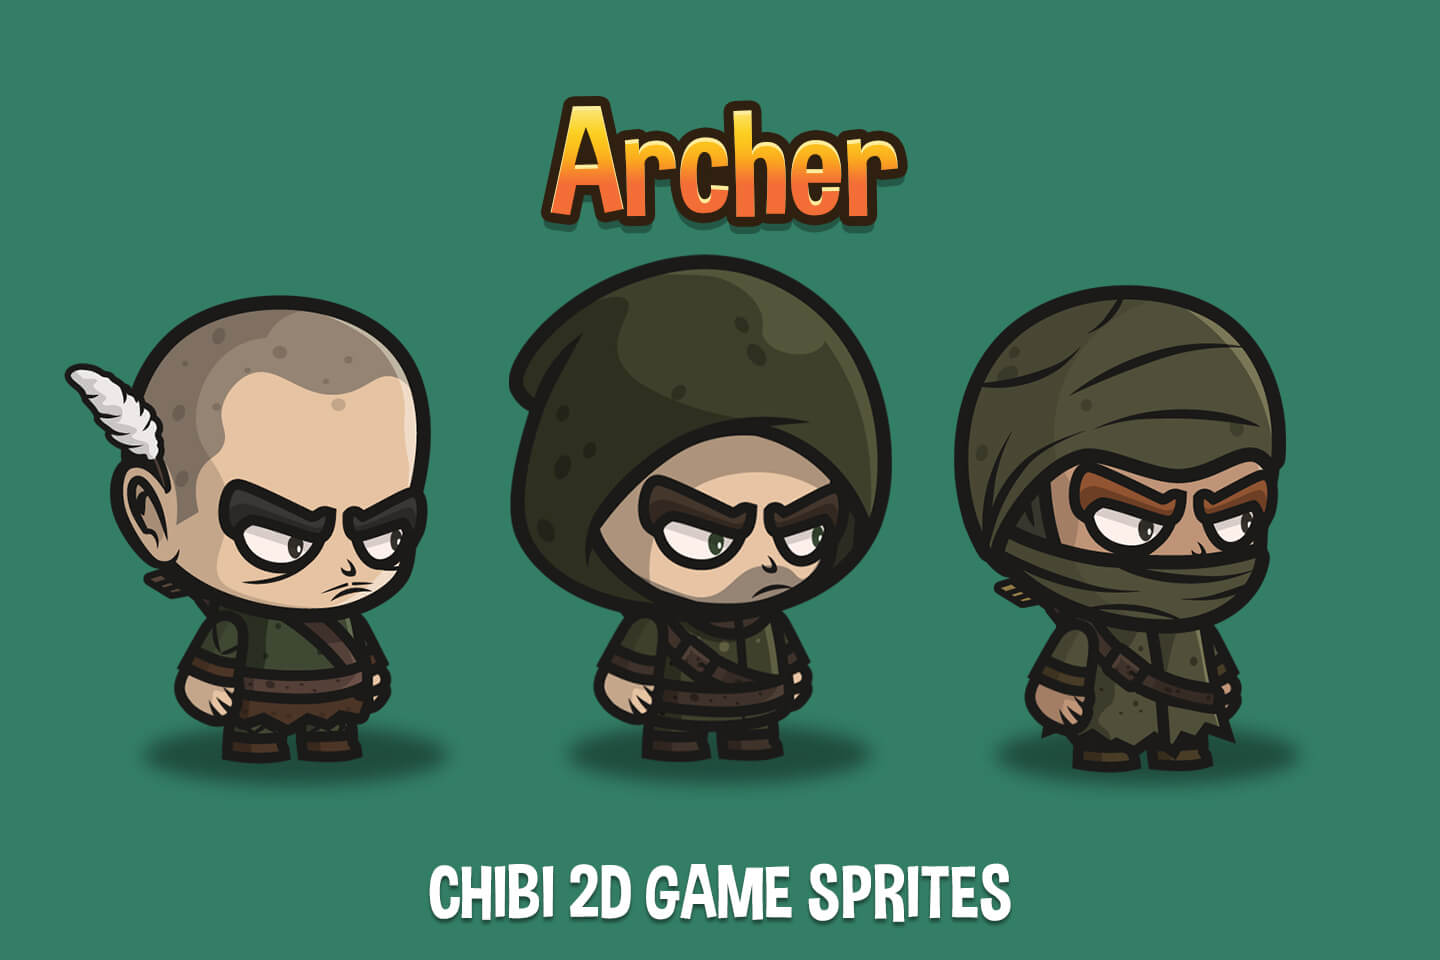 Archer Chibi 2D Game Sprites - CraftPix.net